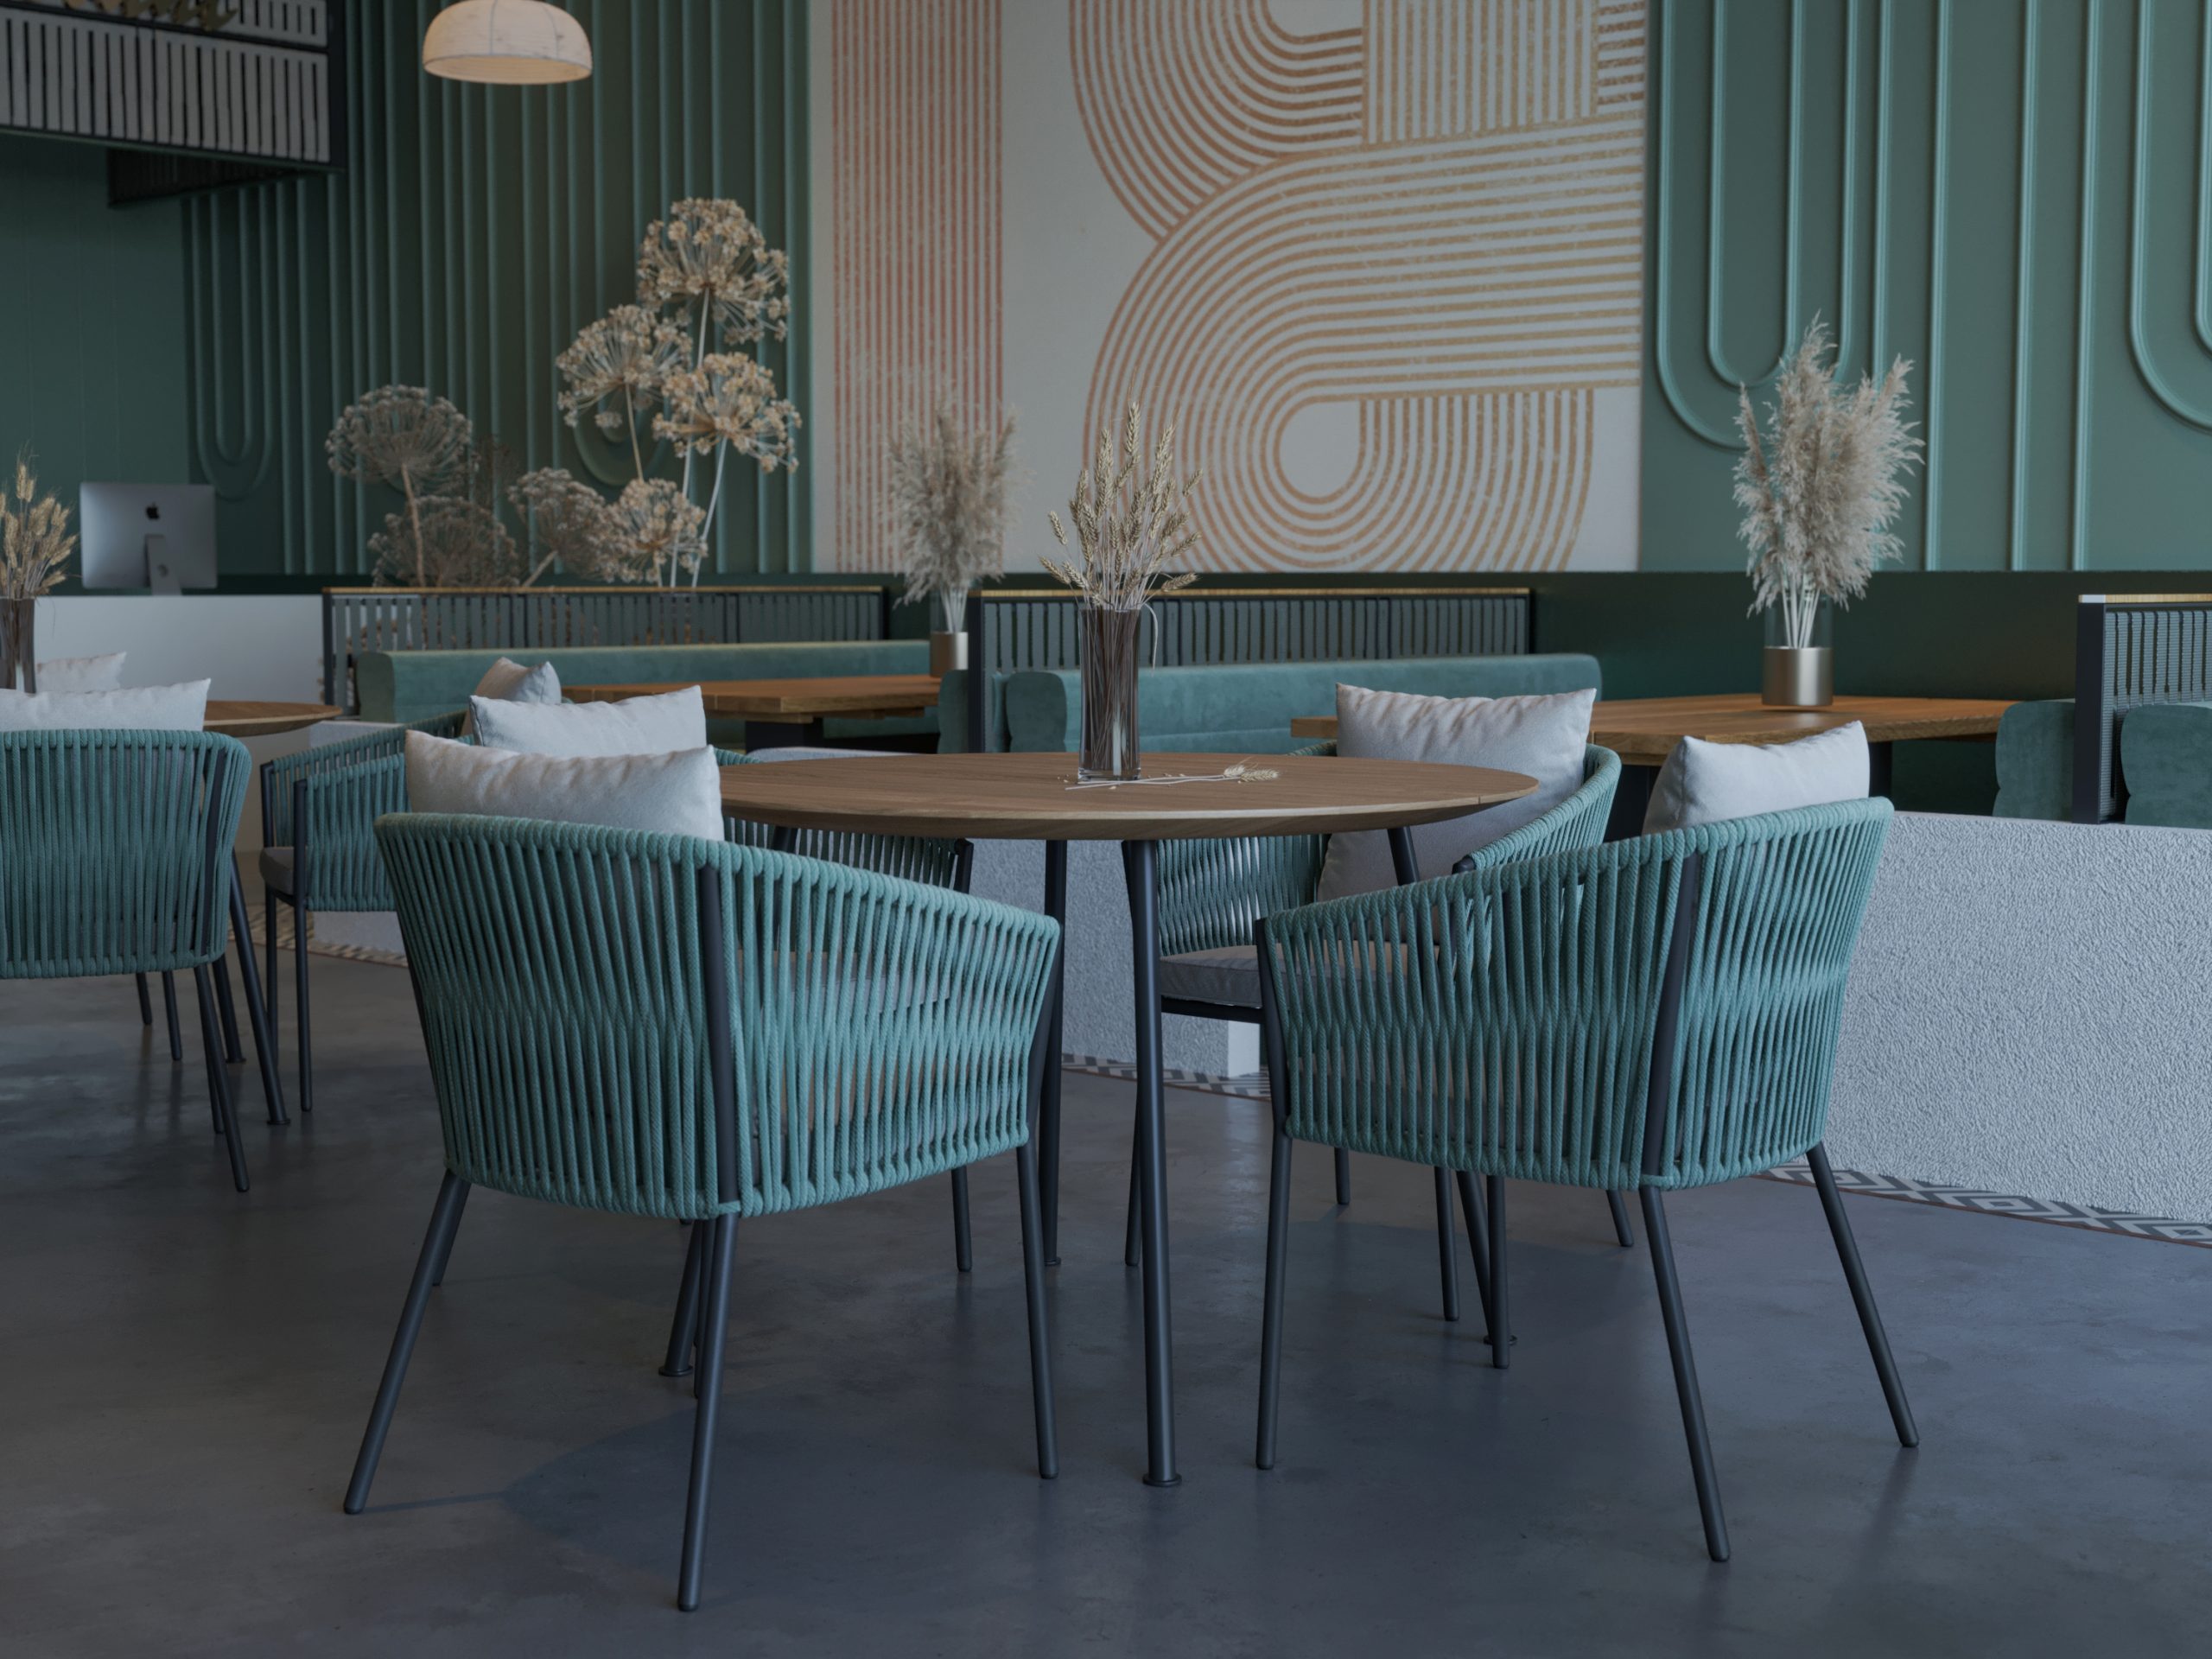 RESTURANT DESIGN IN TURQUOISE - shot - render - interior  restaurant - modern design 